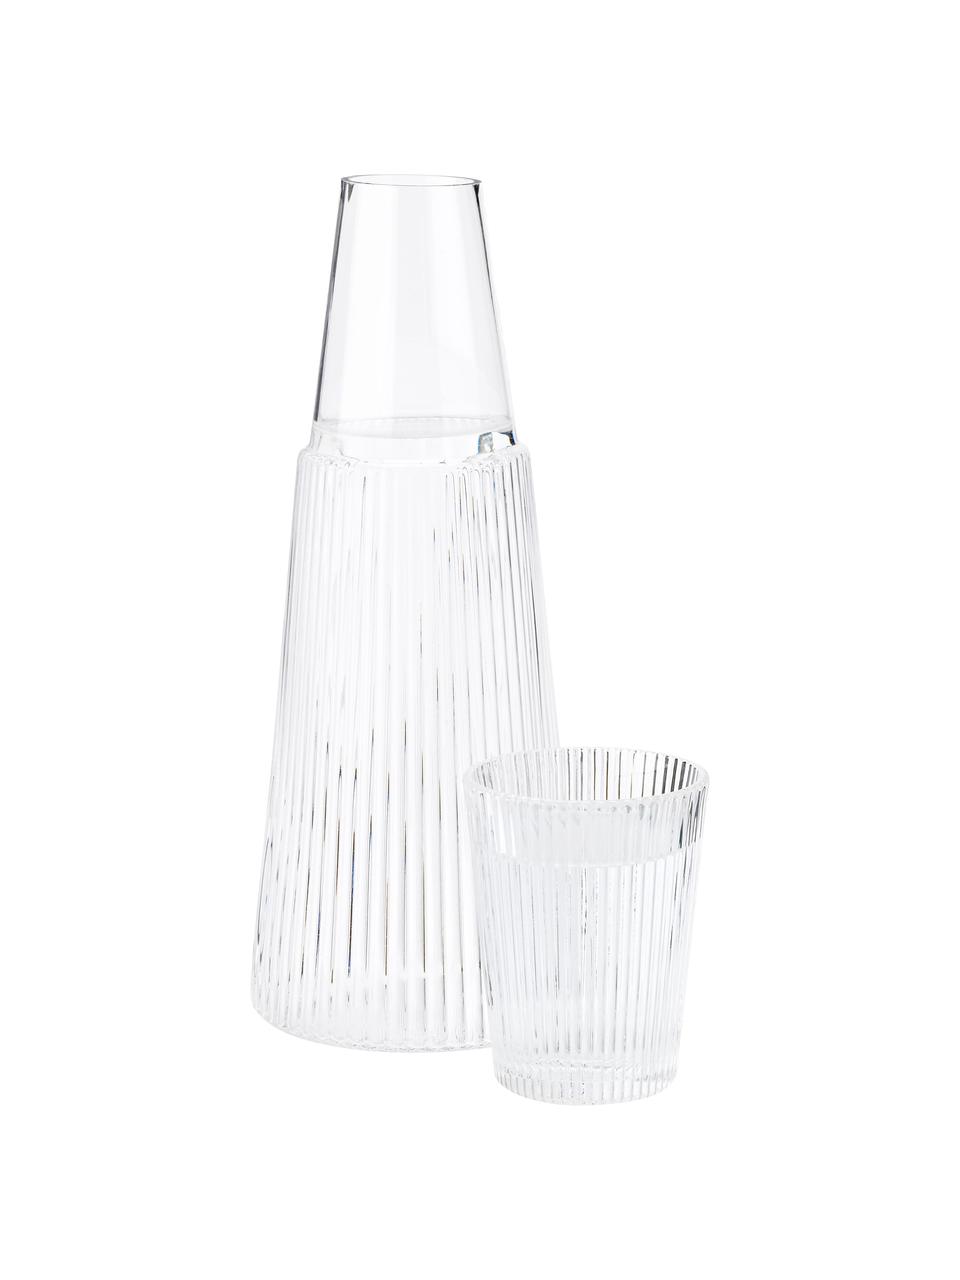 Waterkaraf Pilastro met glas, 1 L, set van 2, Glas, Transparant, H 27 cm, 1 L